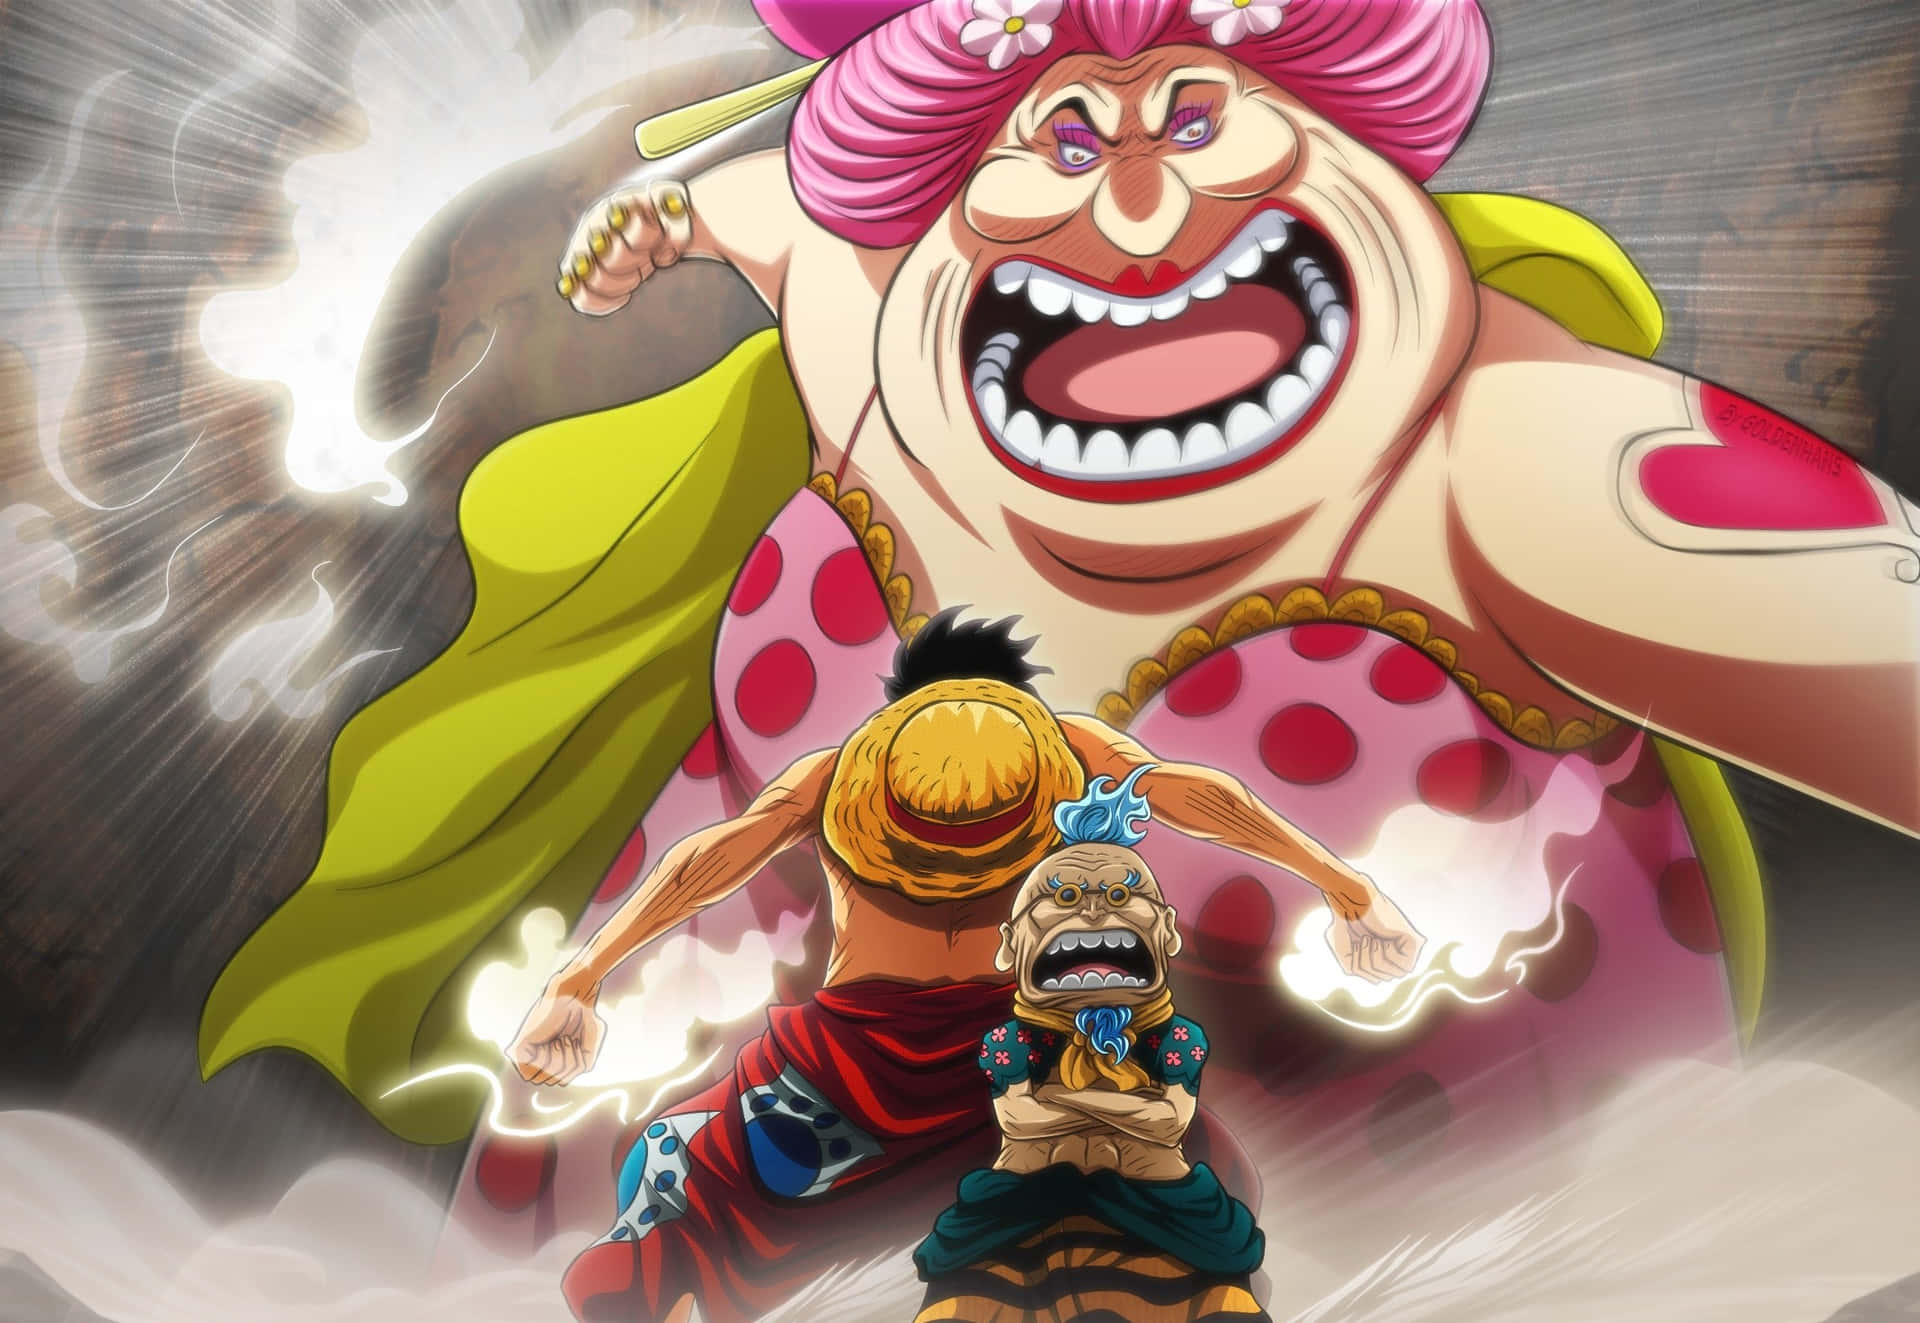 Charlotte Linlin - One Piece's Fearsome Emperor Wallpaper